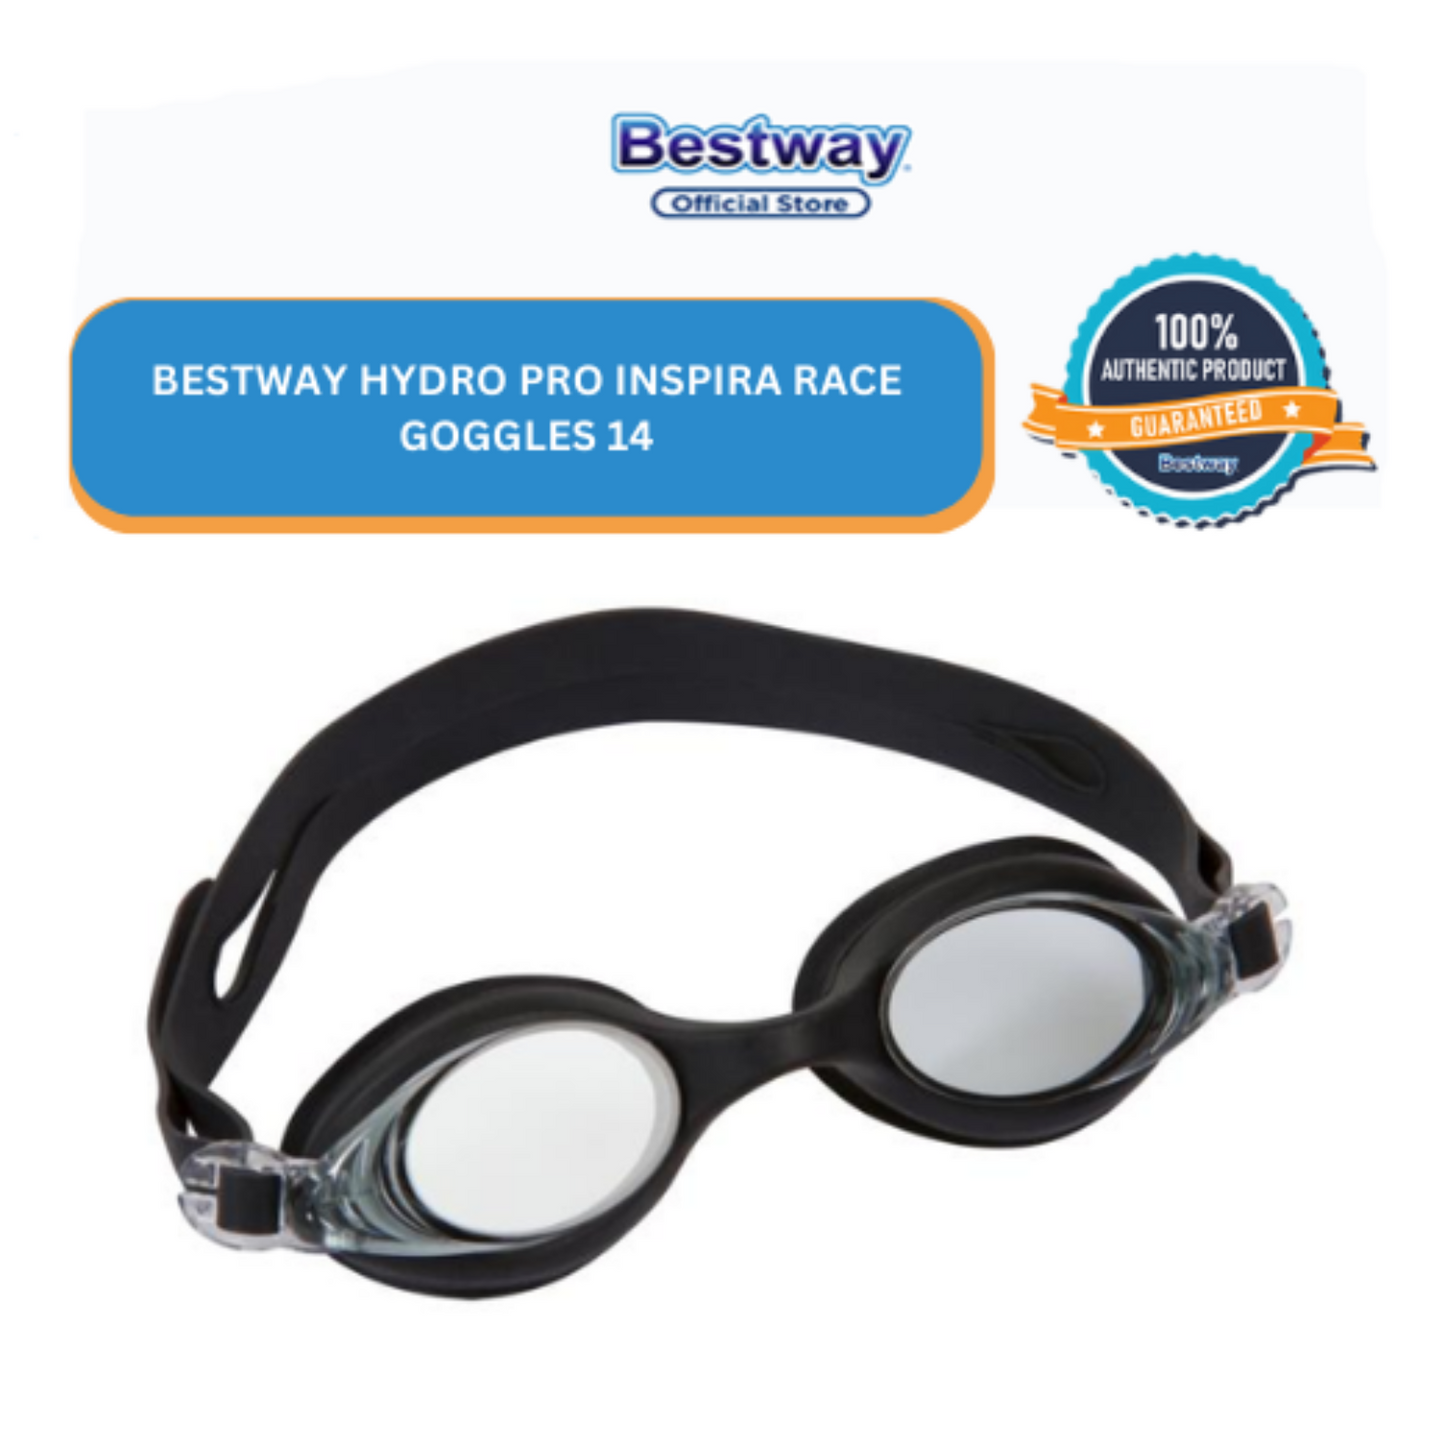 Bestway Hydro Pro Inspira Race Goggles 14